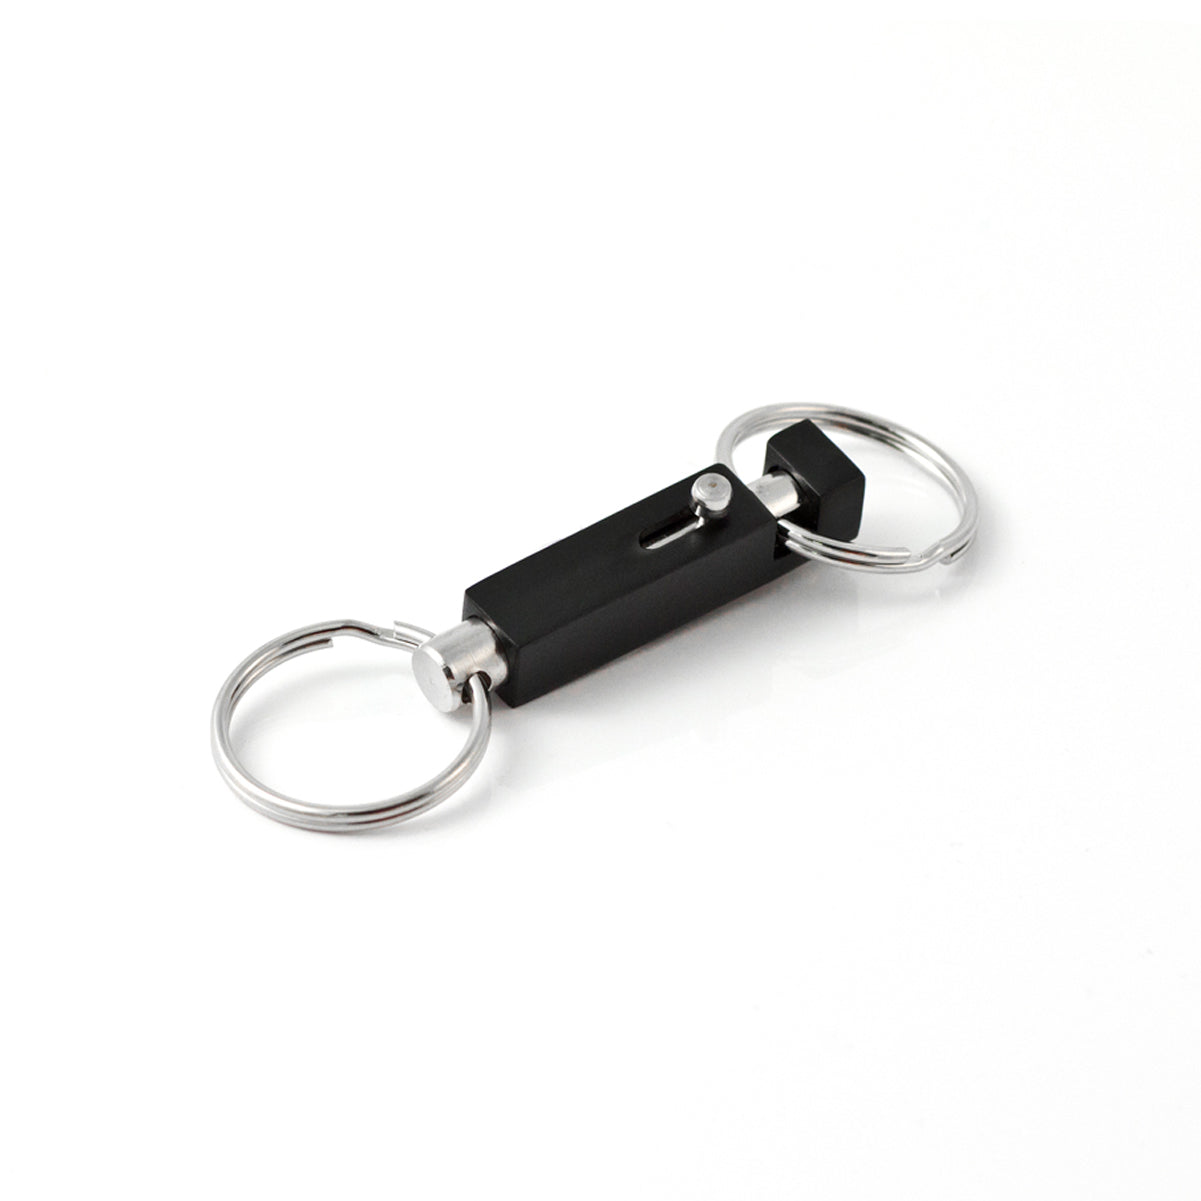 Specialist ID Key-Bak #1101 Quick Release Pull-Apart Key Ring